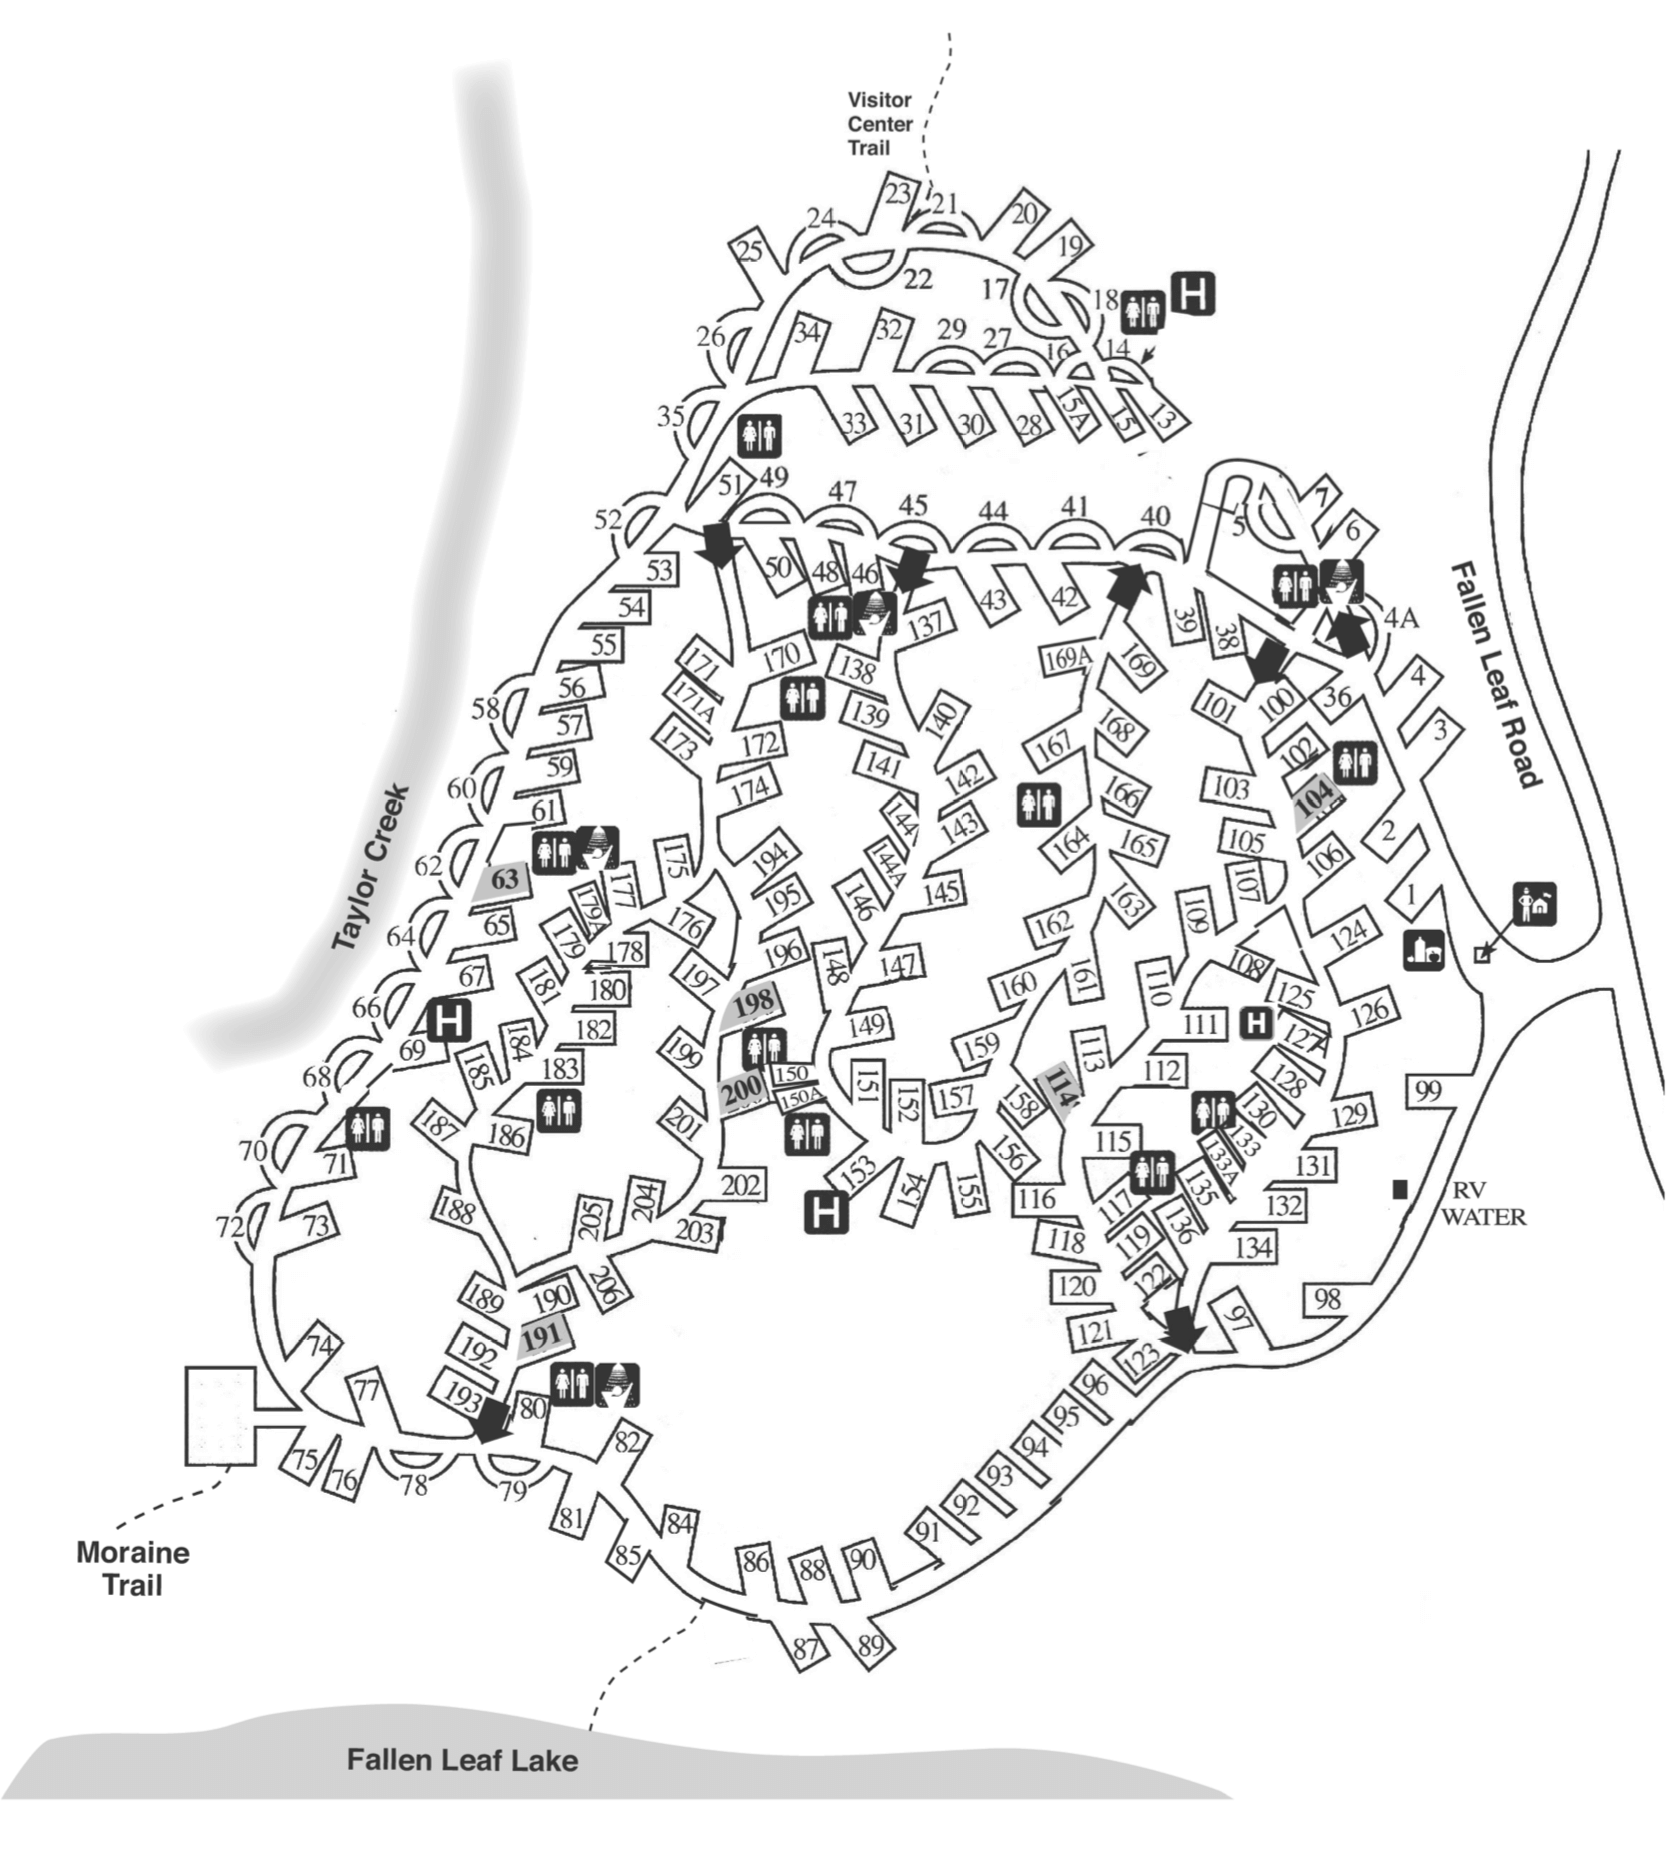 fallen leaf campground site map